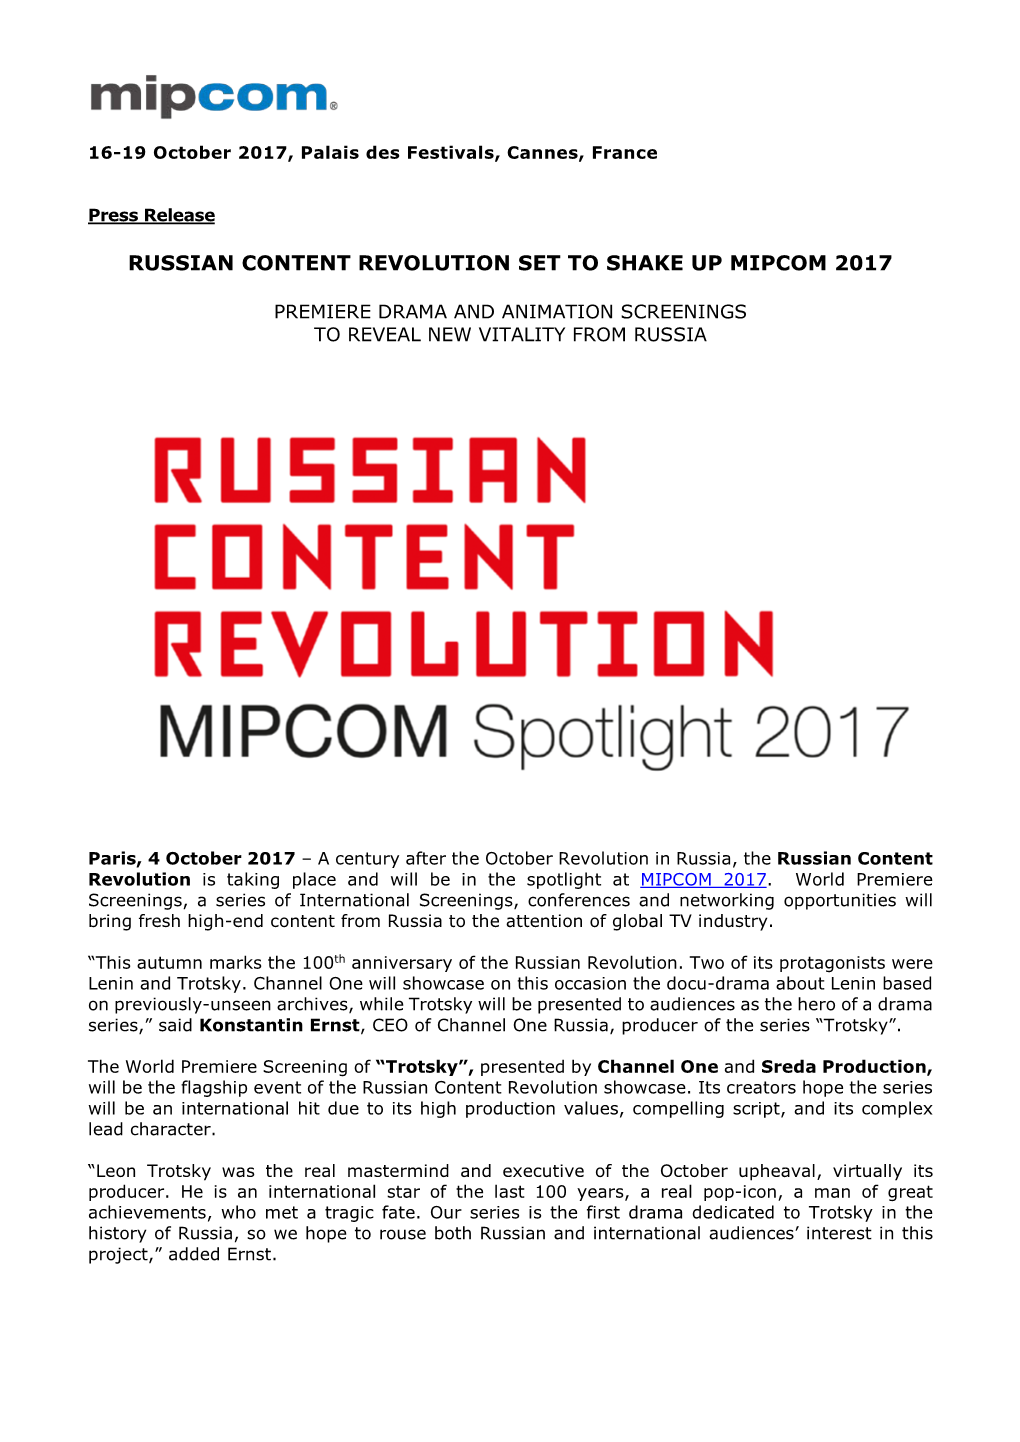 Russian Content Revolution Set to Shake up Mipcom 2017